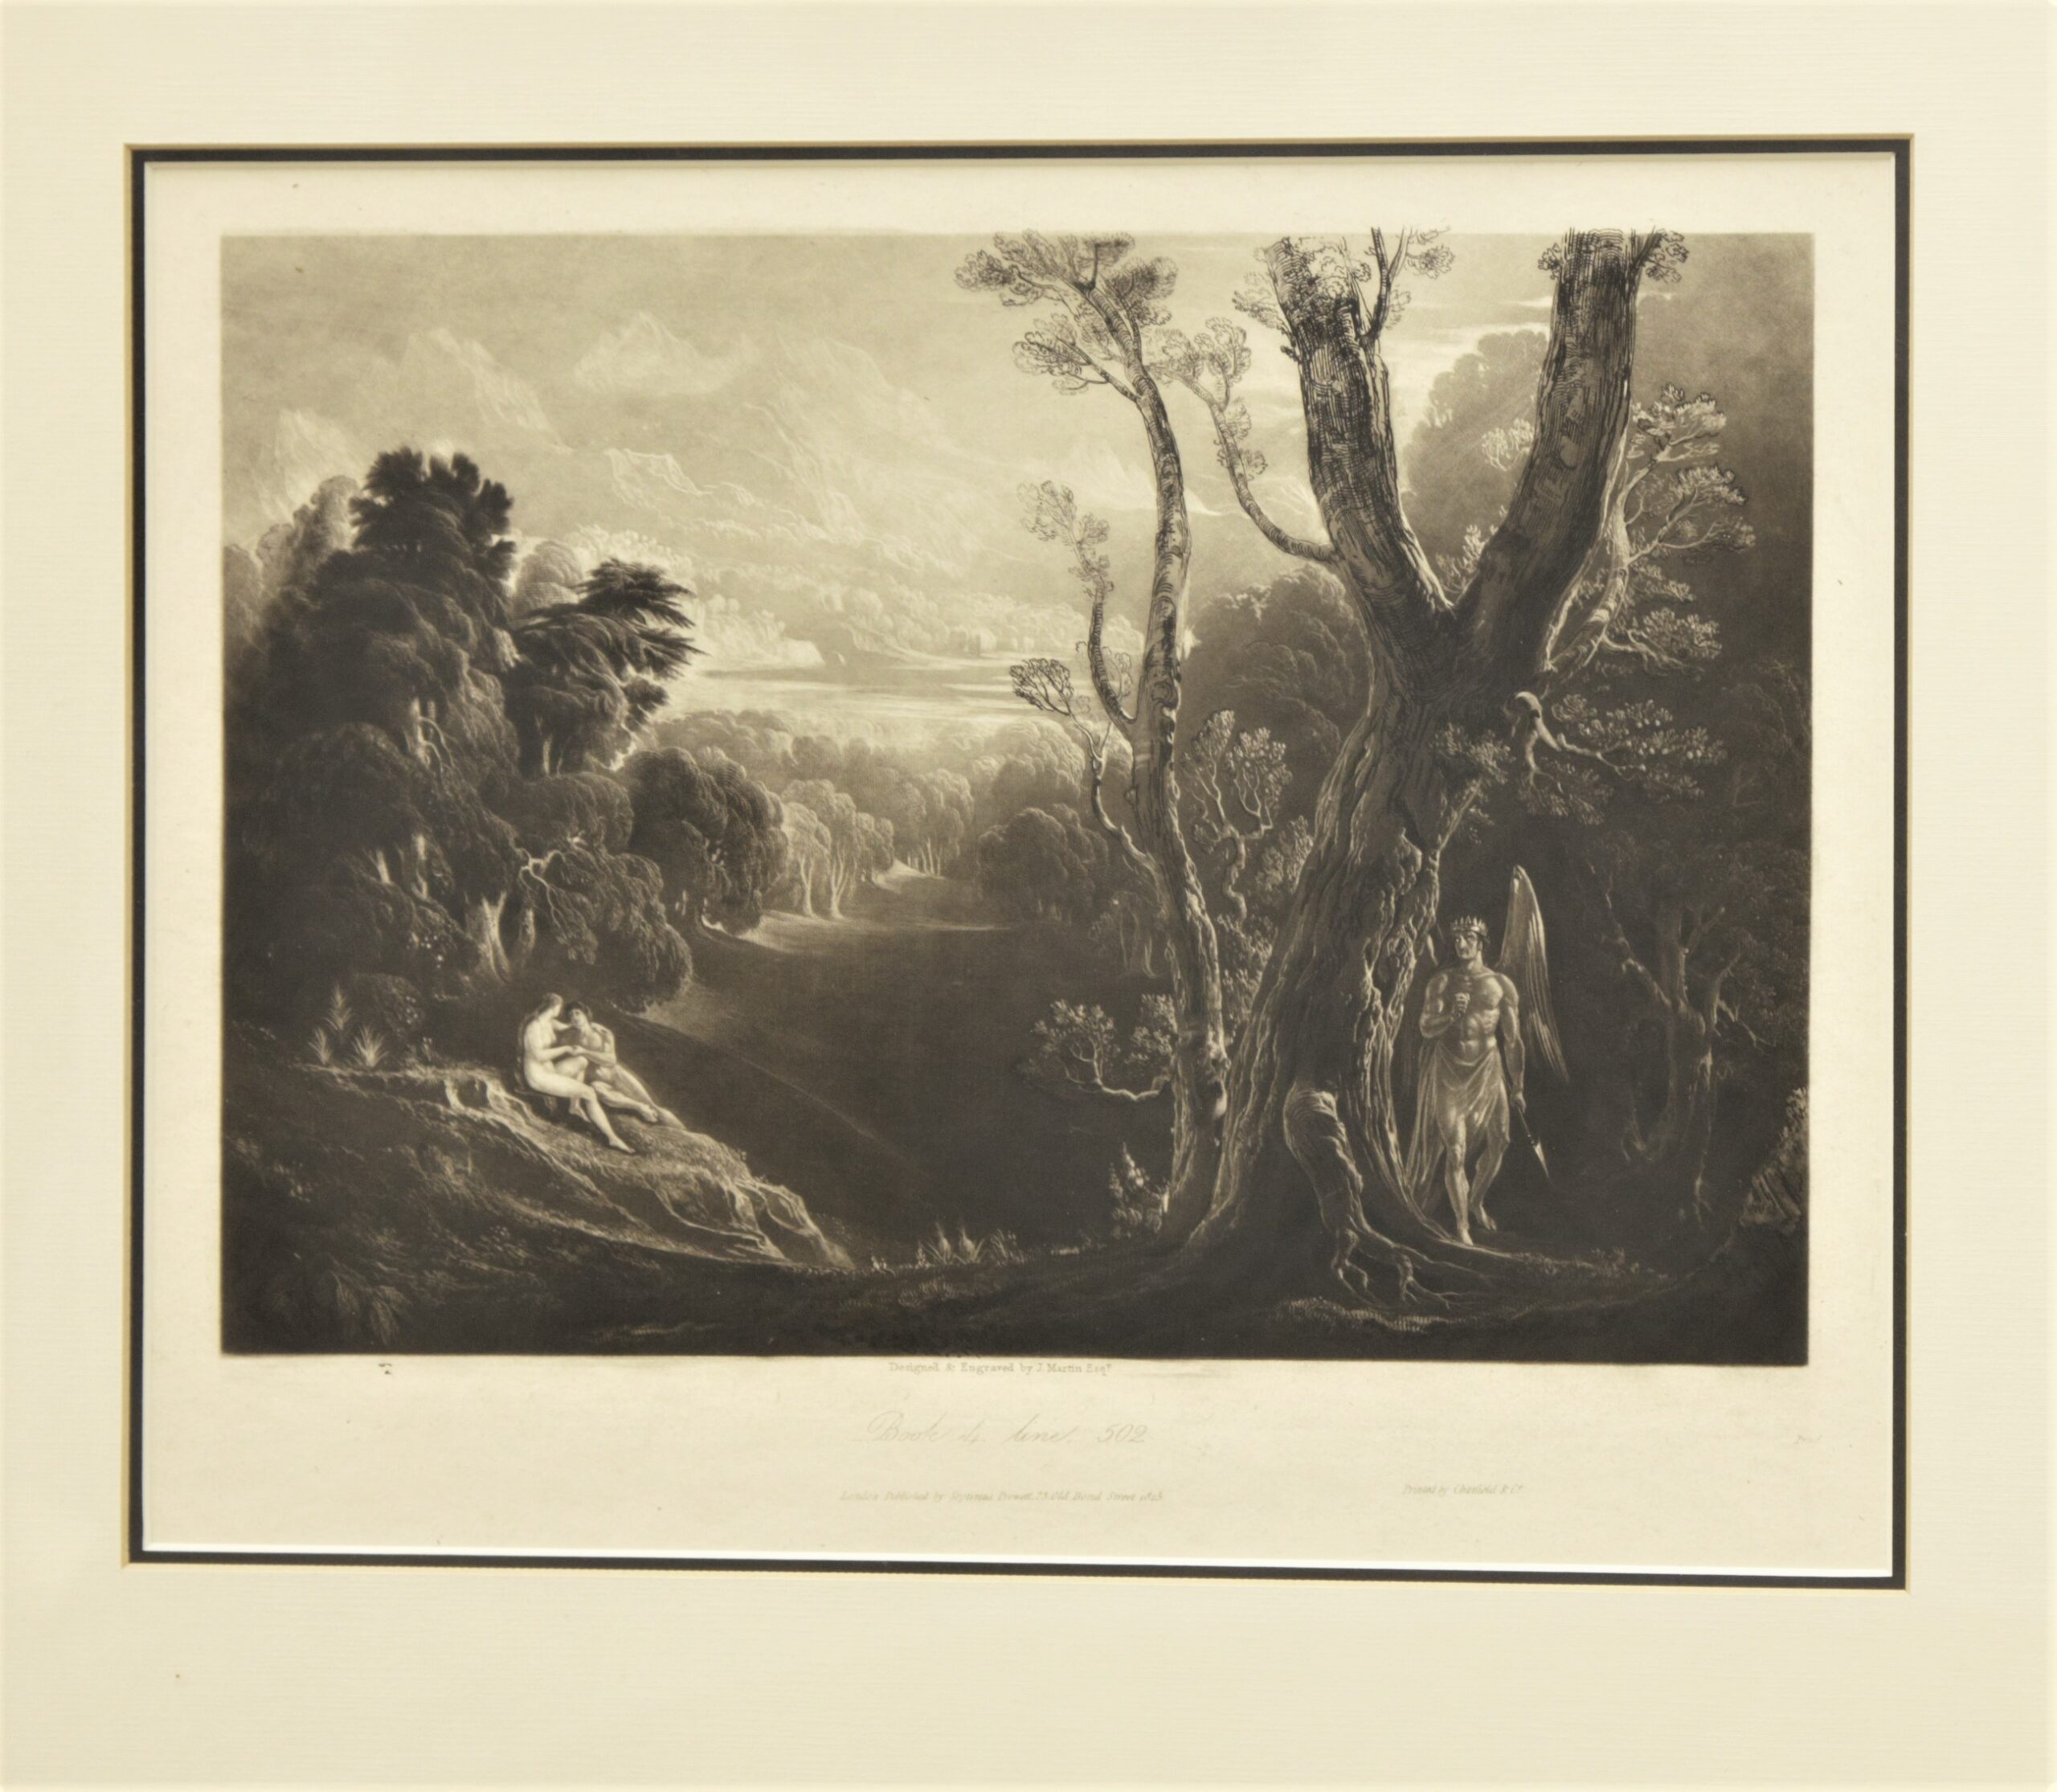 Satan contemplating Adam and Eve in Paradise (John Milton, Paradise Lost, Book IV, Line 502) Image